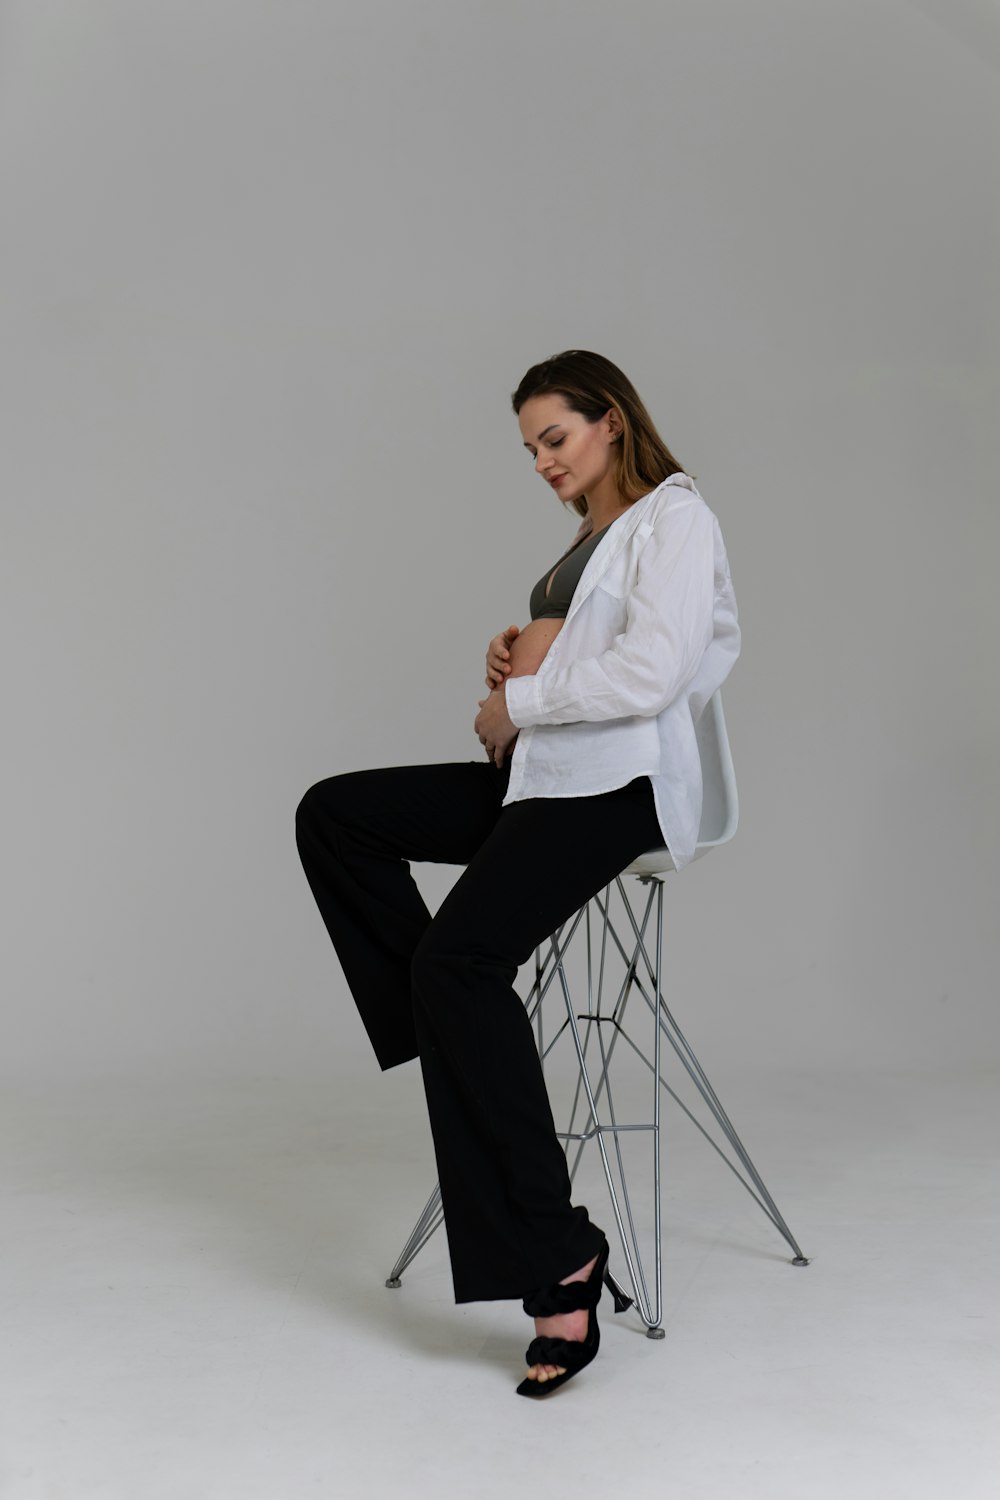 Una donna seduta su una sedia con le gambe incrociate